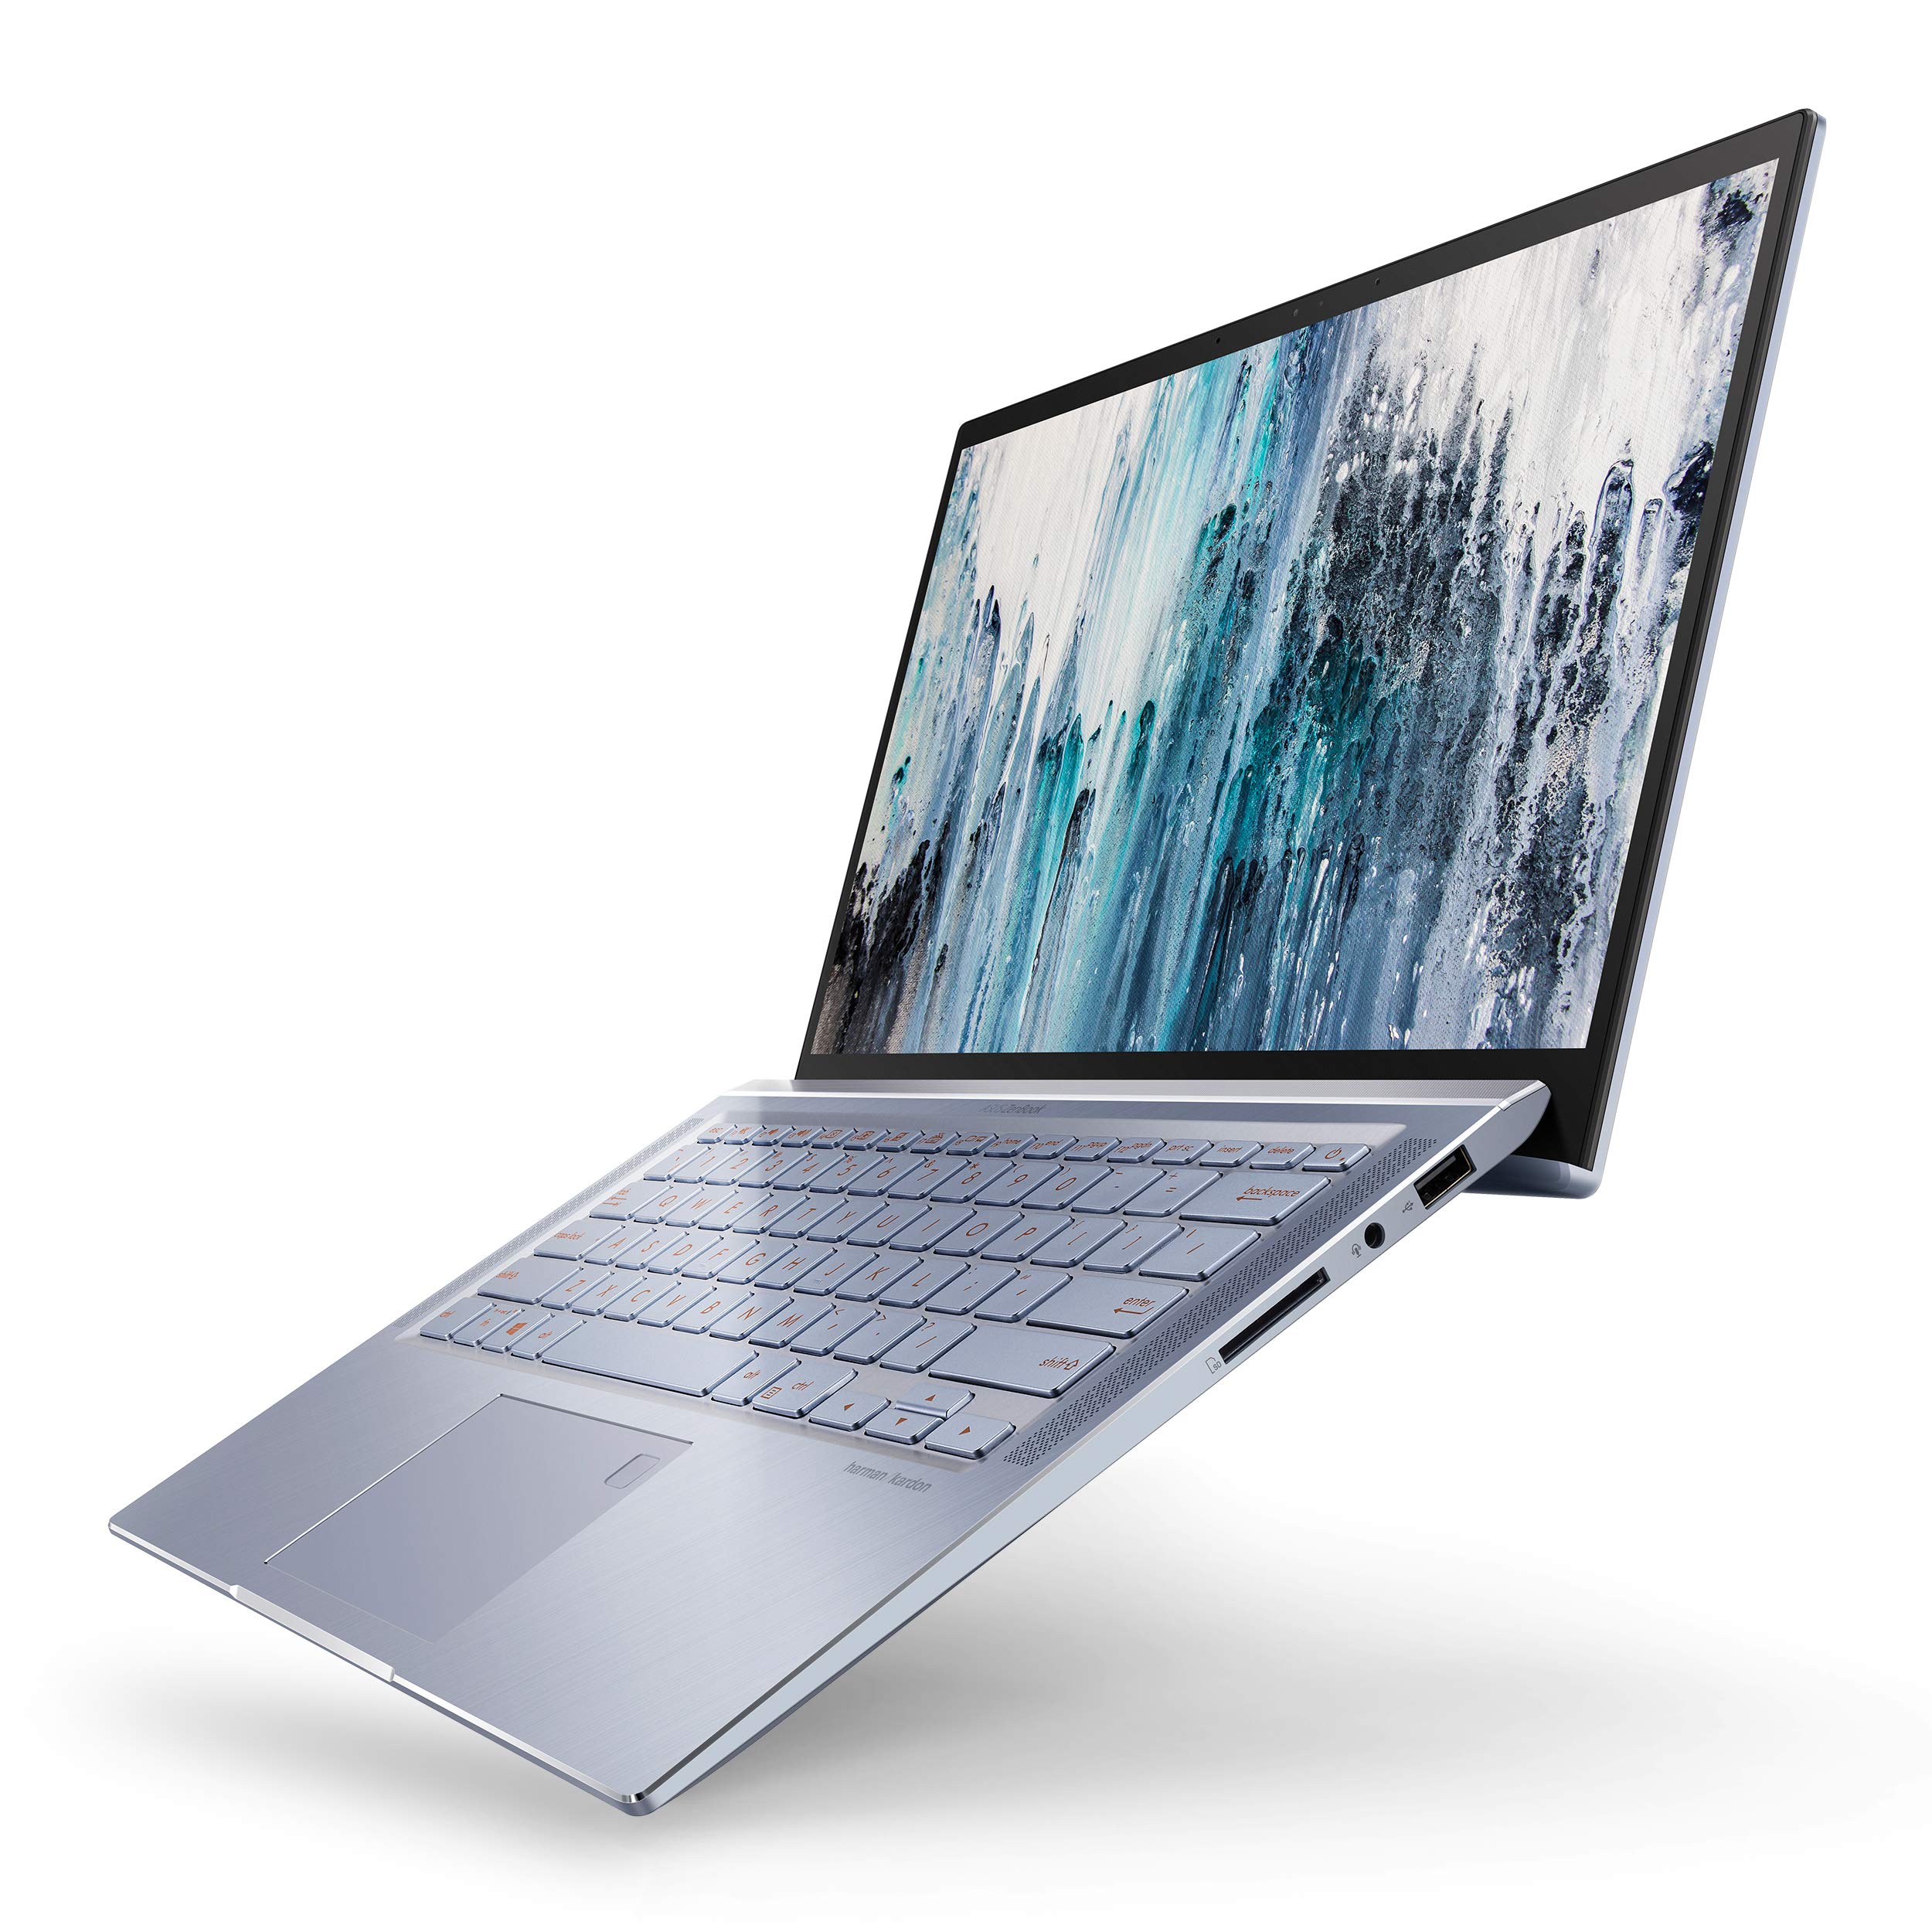 Book Cover ASUS ZenBook 14 Ultra Thin and Light Laptop, 4-Way NanoEdge 14” FHD, Intel Core i7-8565U, 8GB RAM, 512GB NVMe PCIe SSD, NumberPad, Wi-Fi 5, Windows 10, Silver Blue, UX431FA-ES74